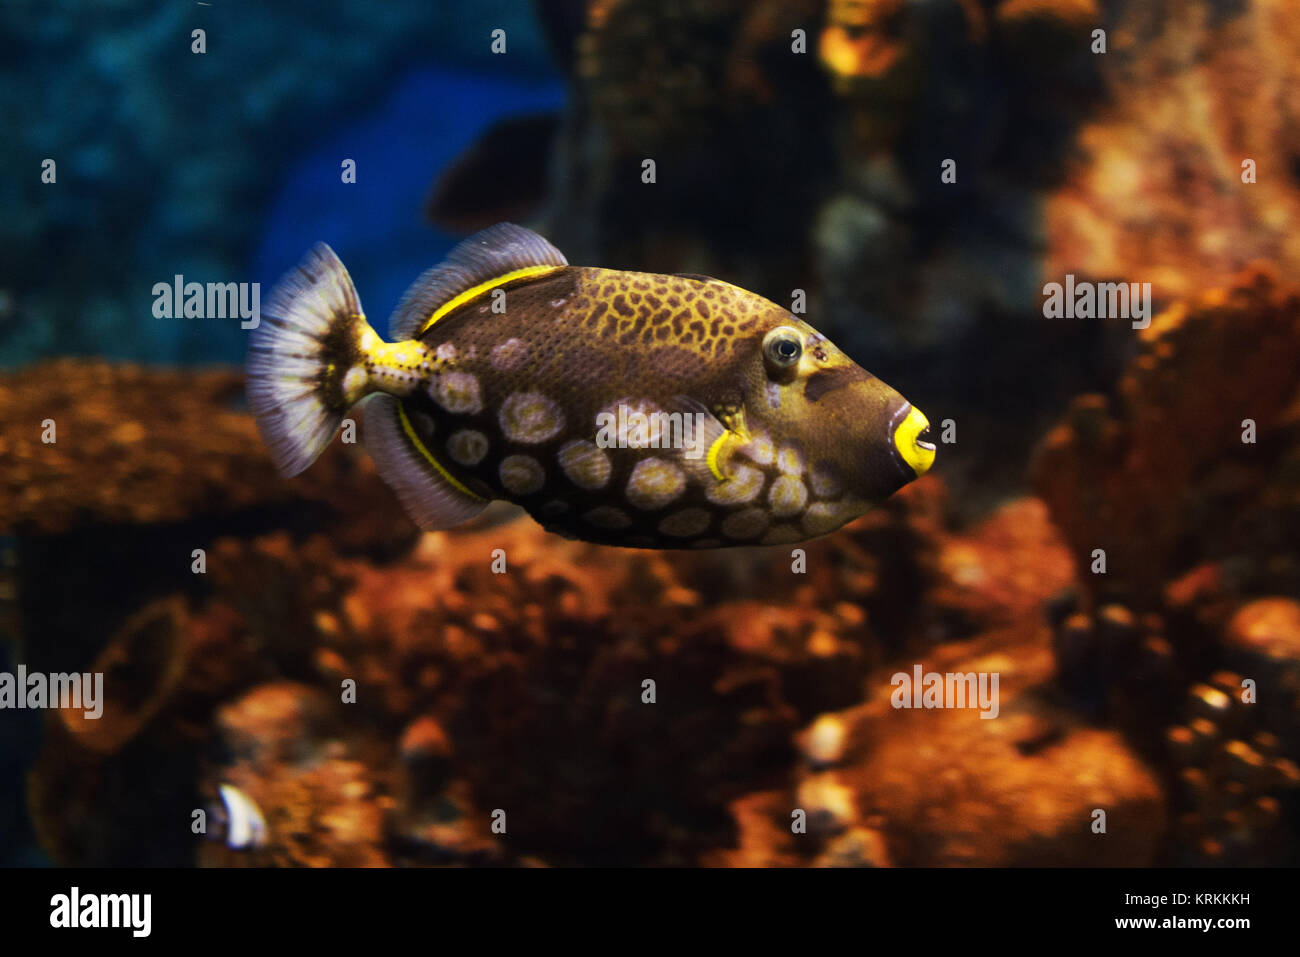 close-up view of a clown triggerfish (balistoides conspicillum),soft focus Stock Photo